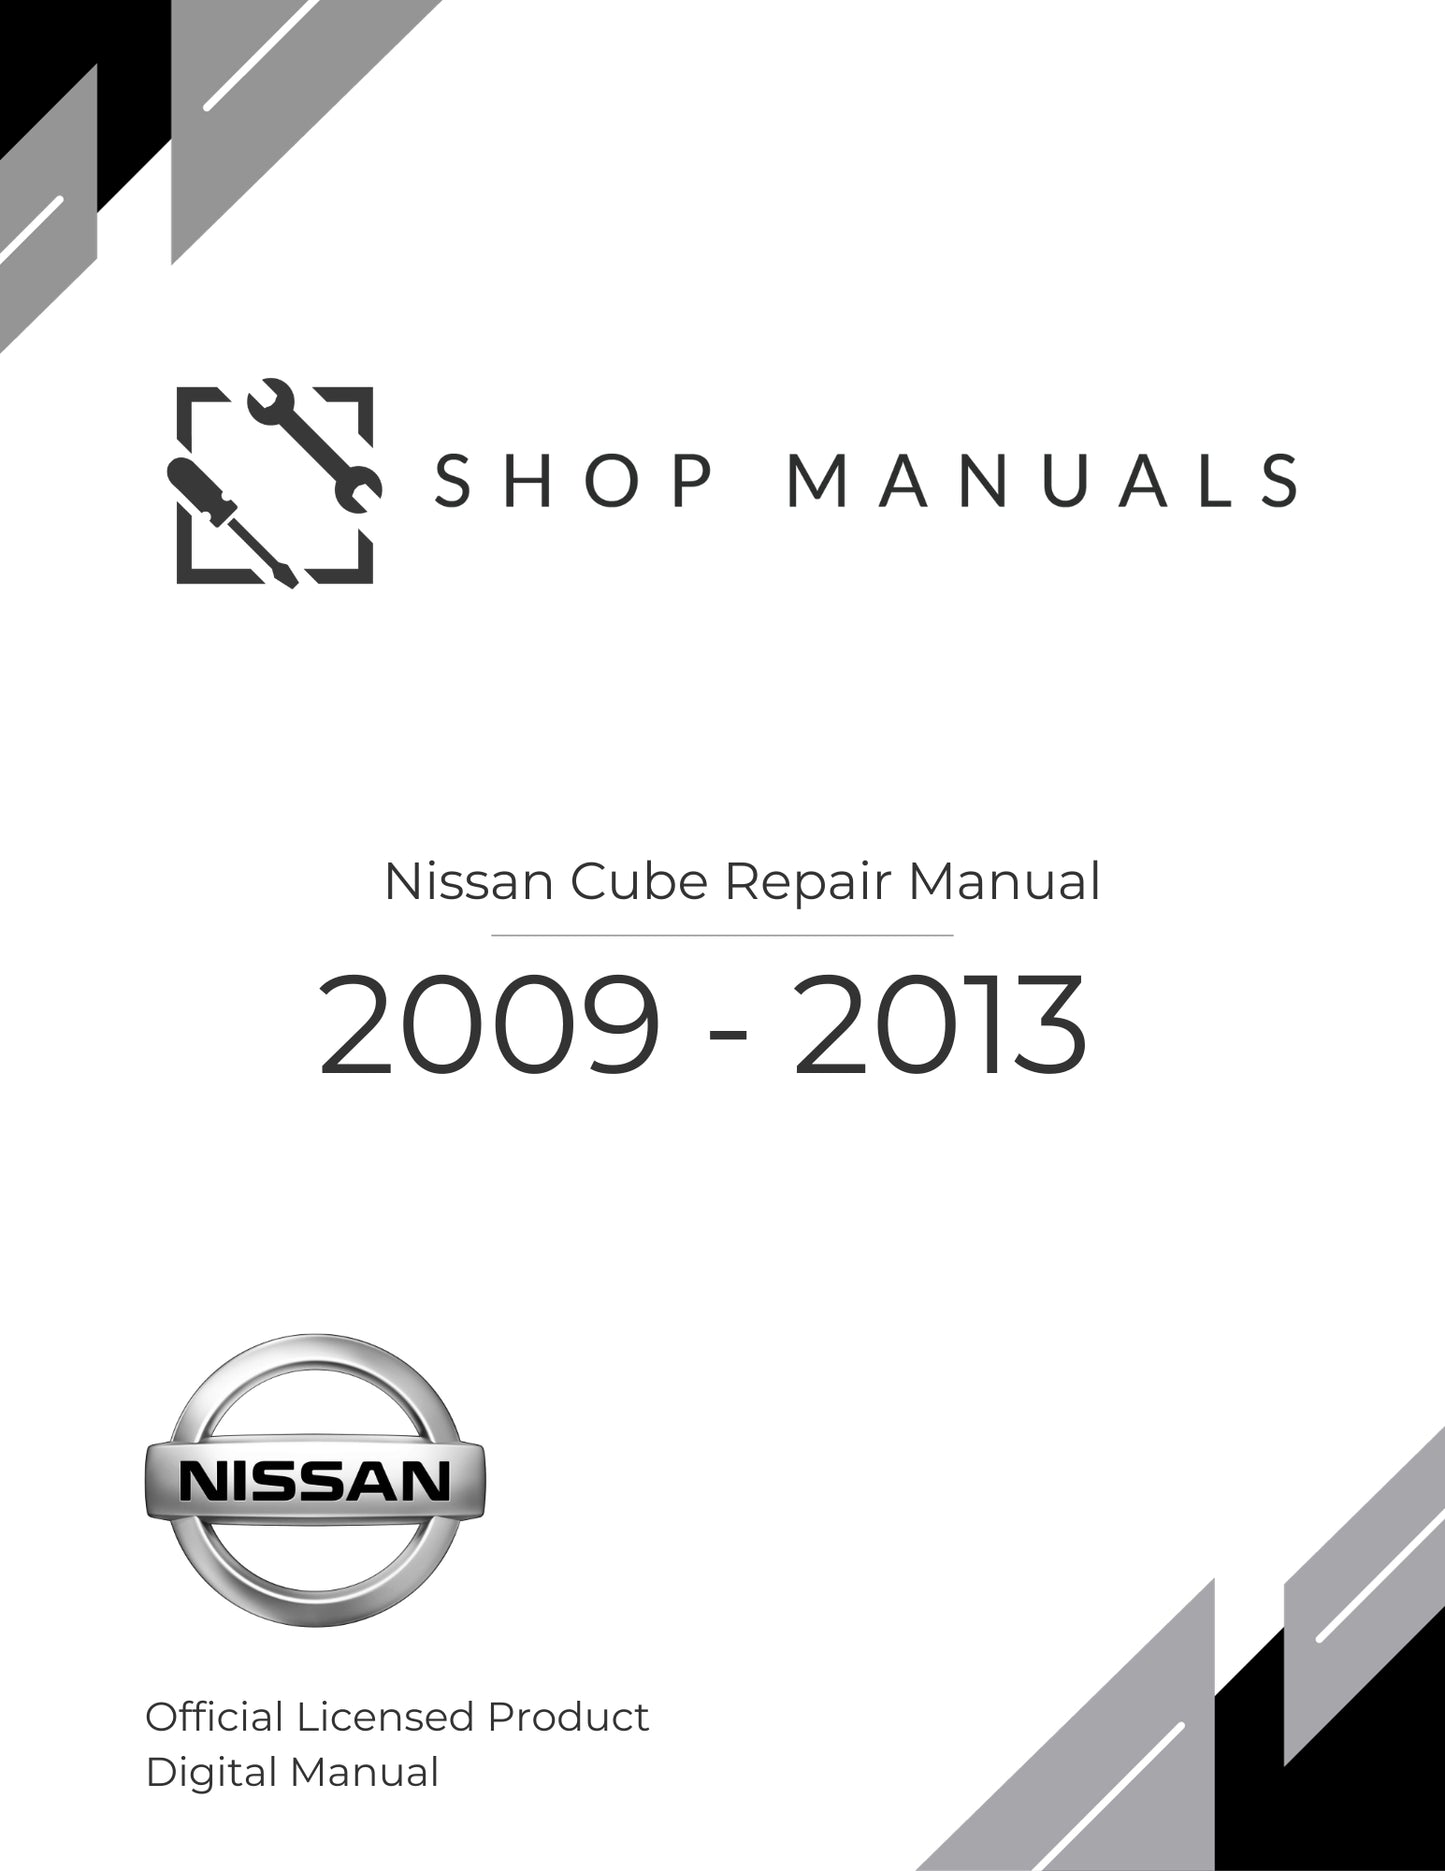 2009 - 2013 Nissan Cube Repair Manual